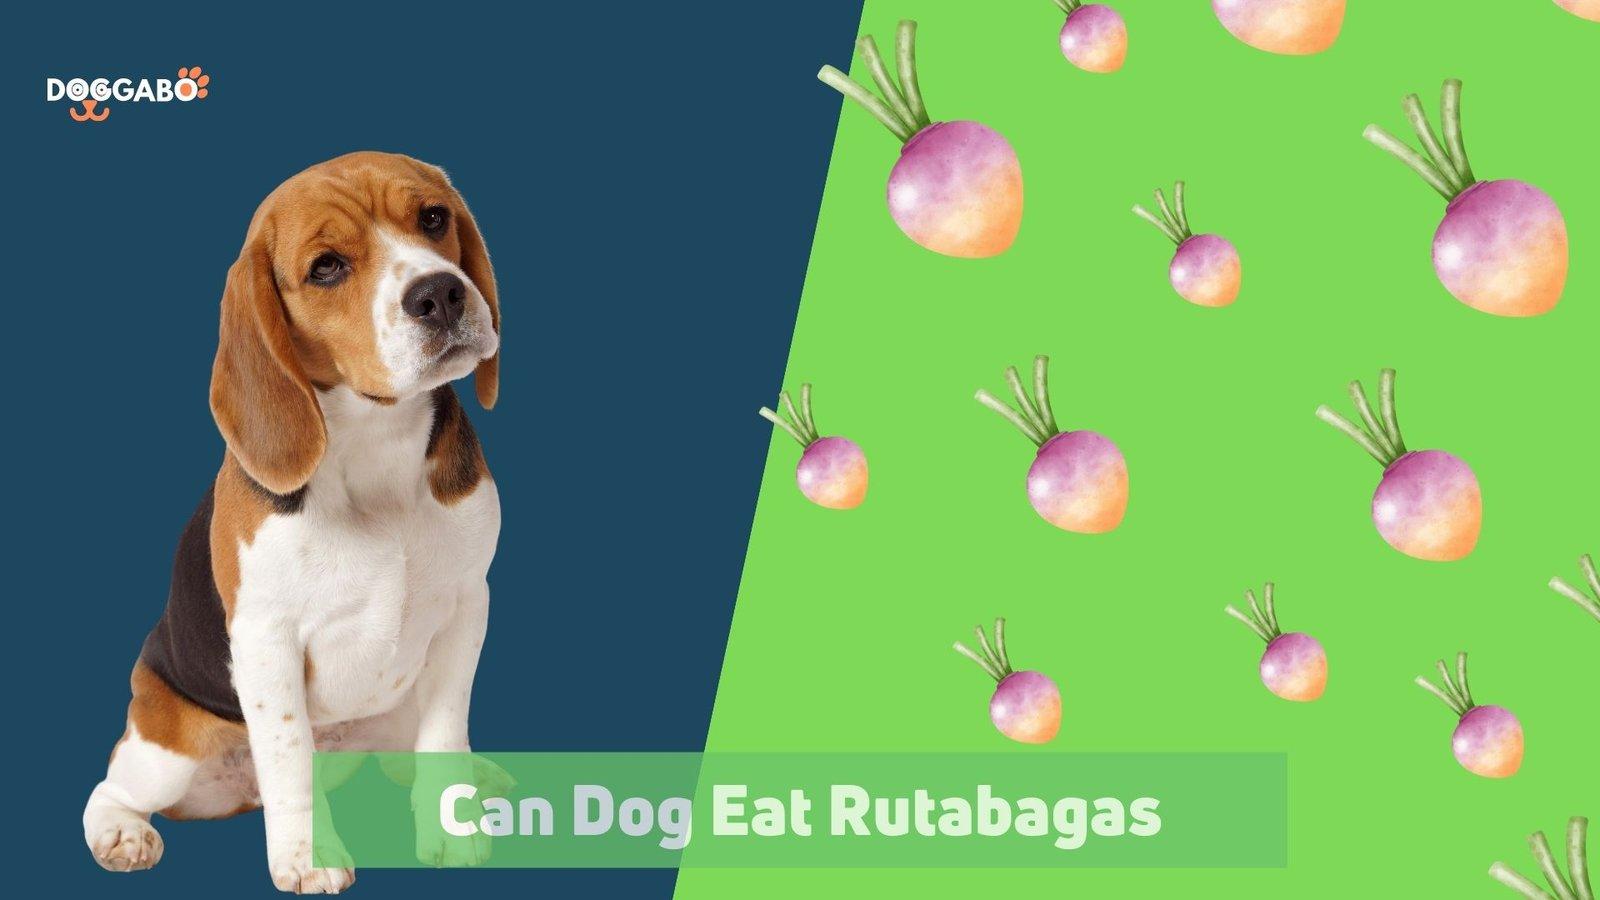 Can Dogs Eat Rutabaga